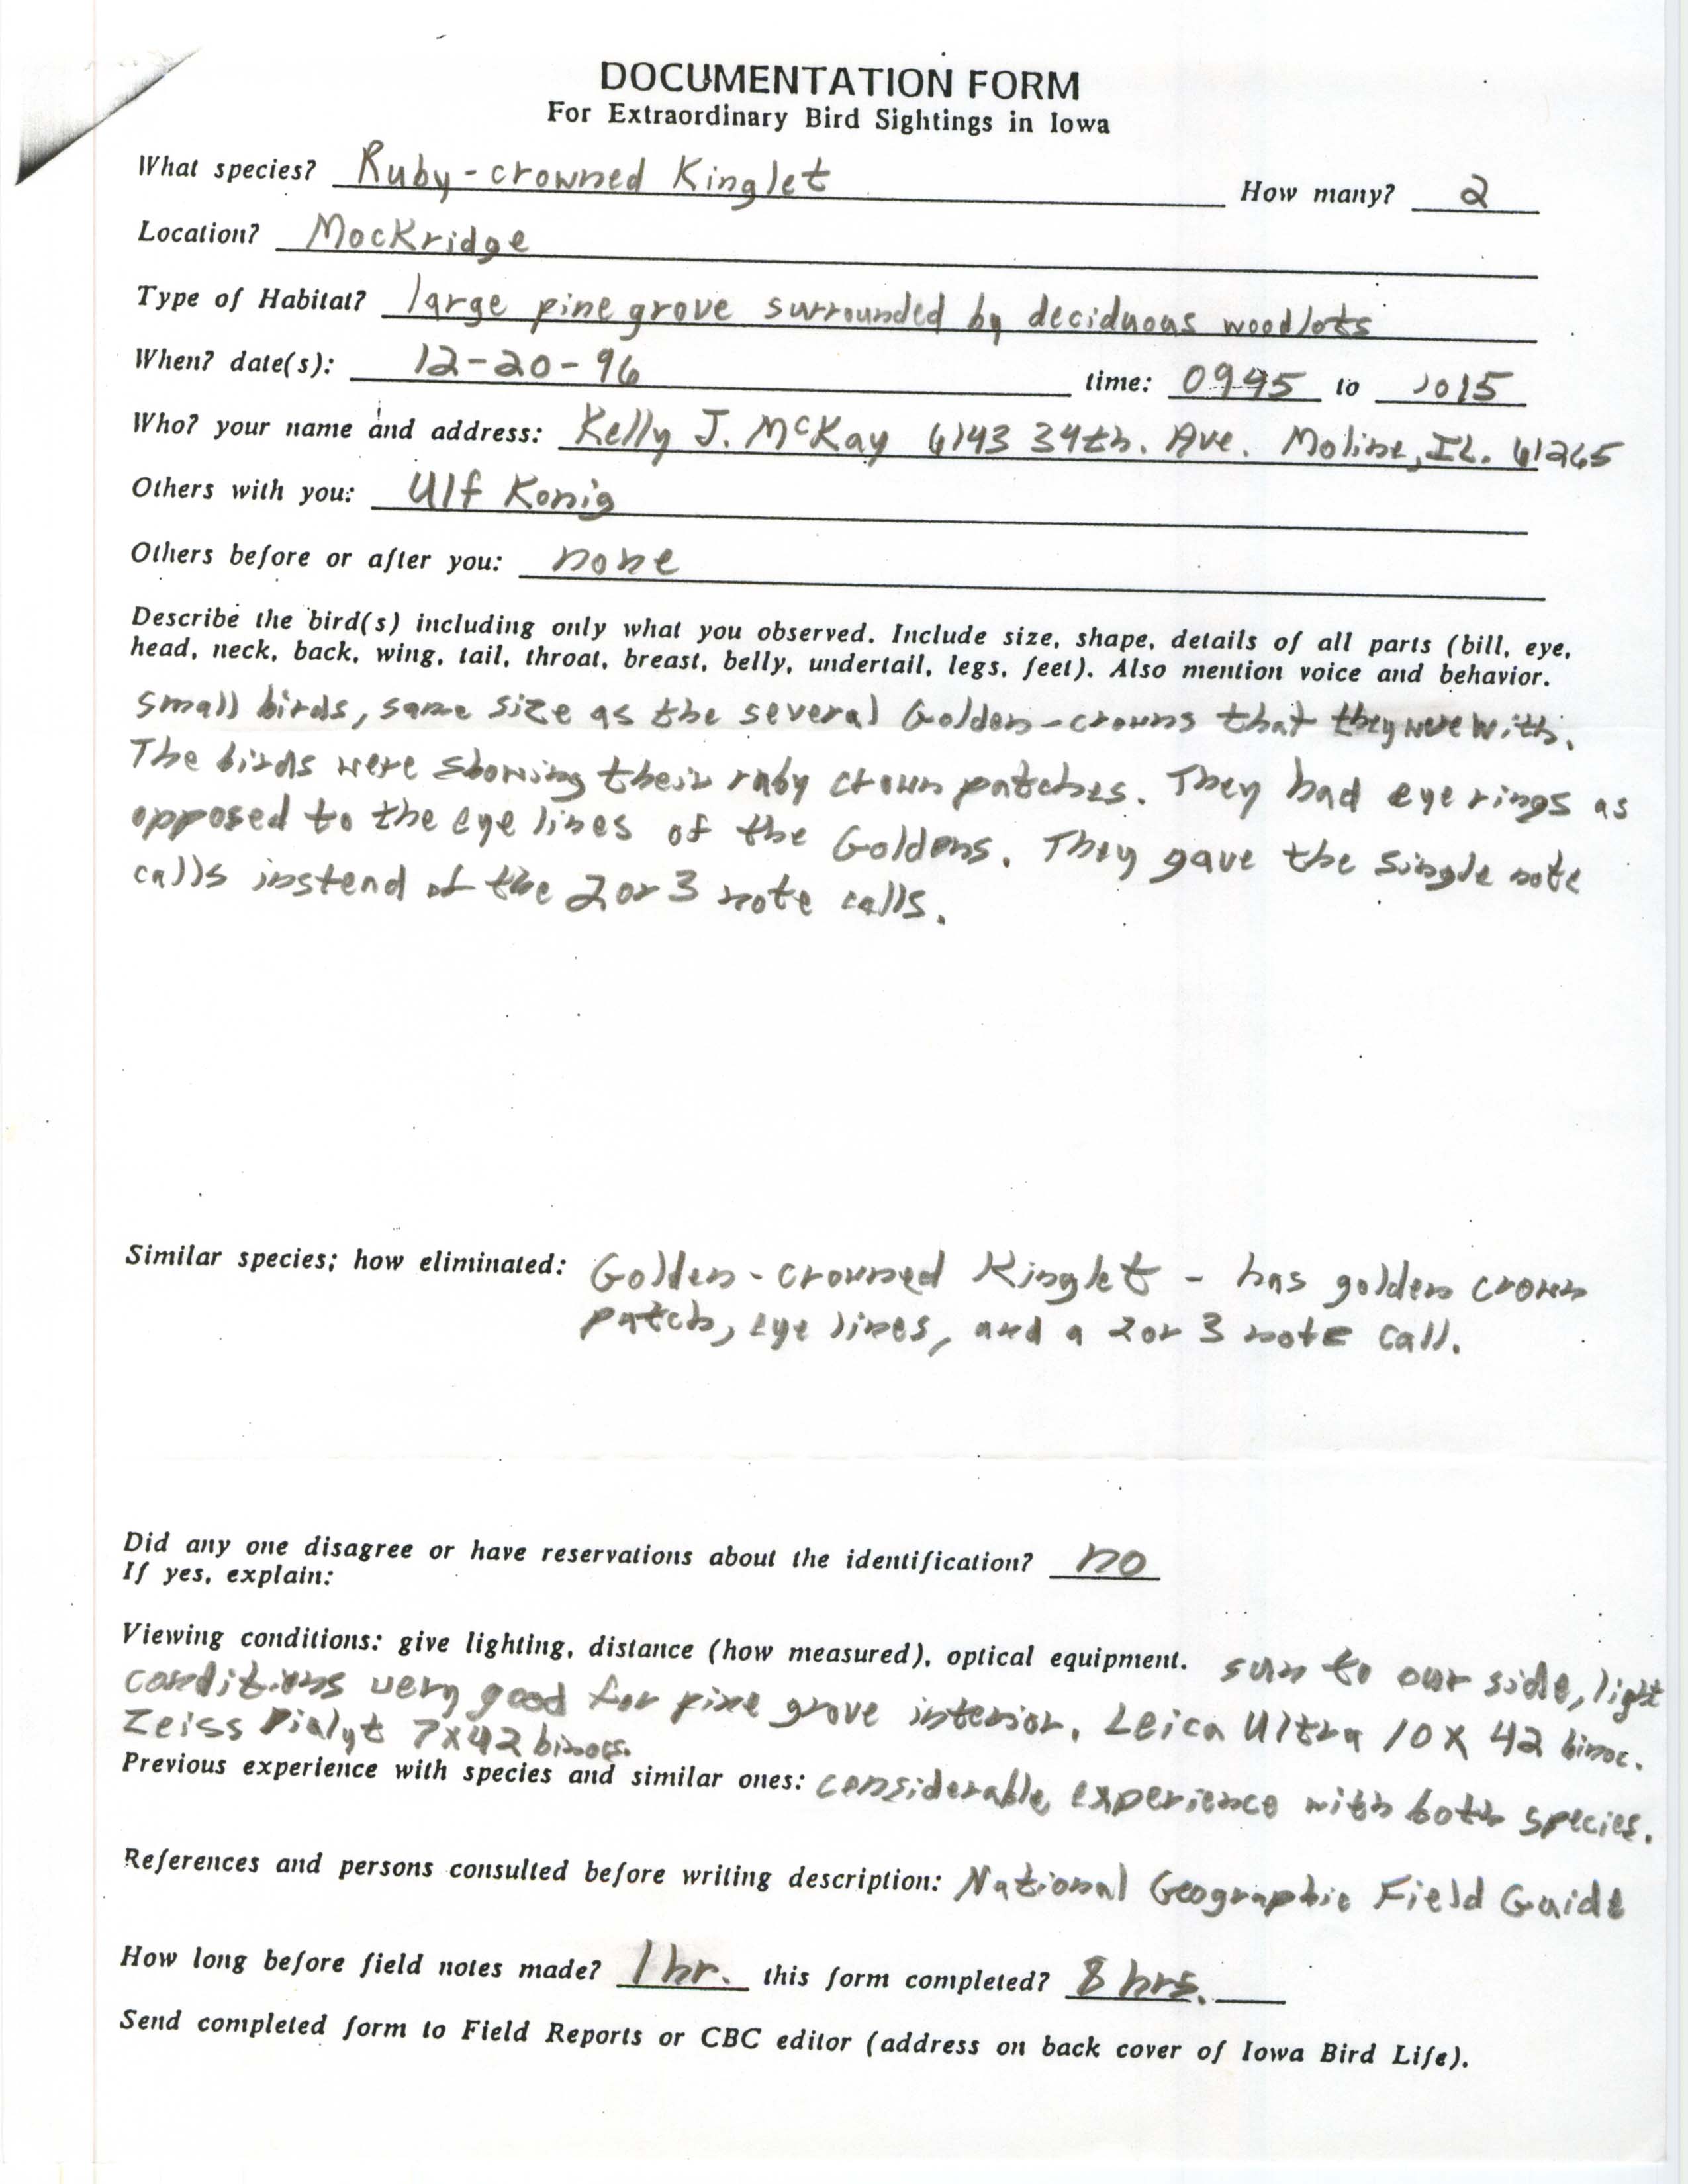 Rare bird documentation form for Ruby-crowned Kinglet at Mockridge County Wildlife Preserve, 1996